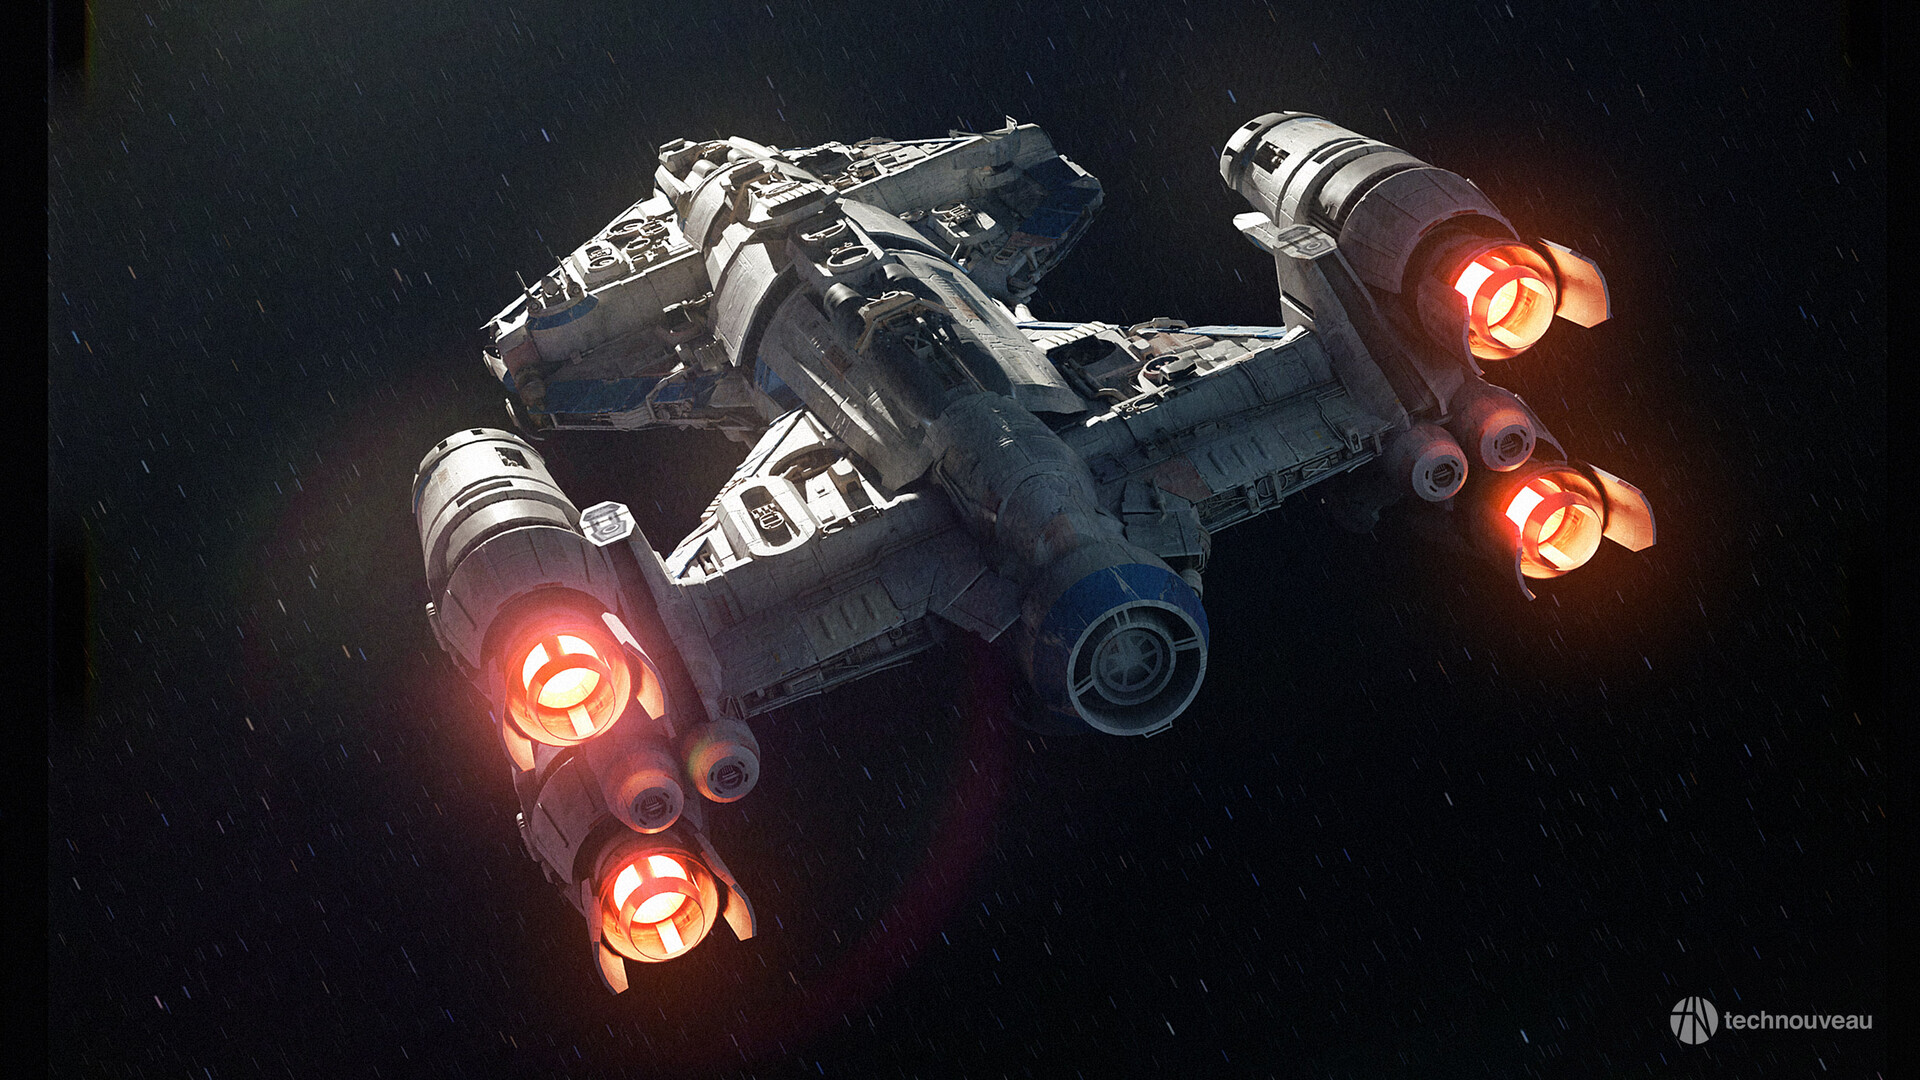 General 1920x1080 Star Wars Star Wars Ships science fiction space spaceship vehicle digital art CGI